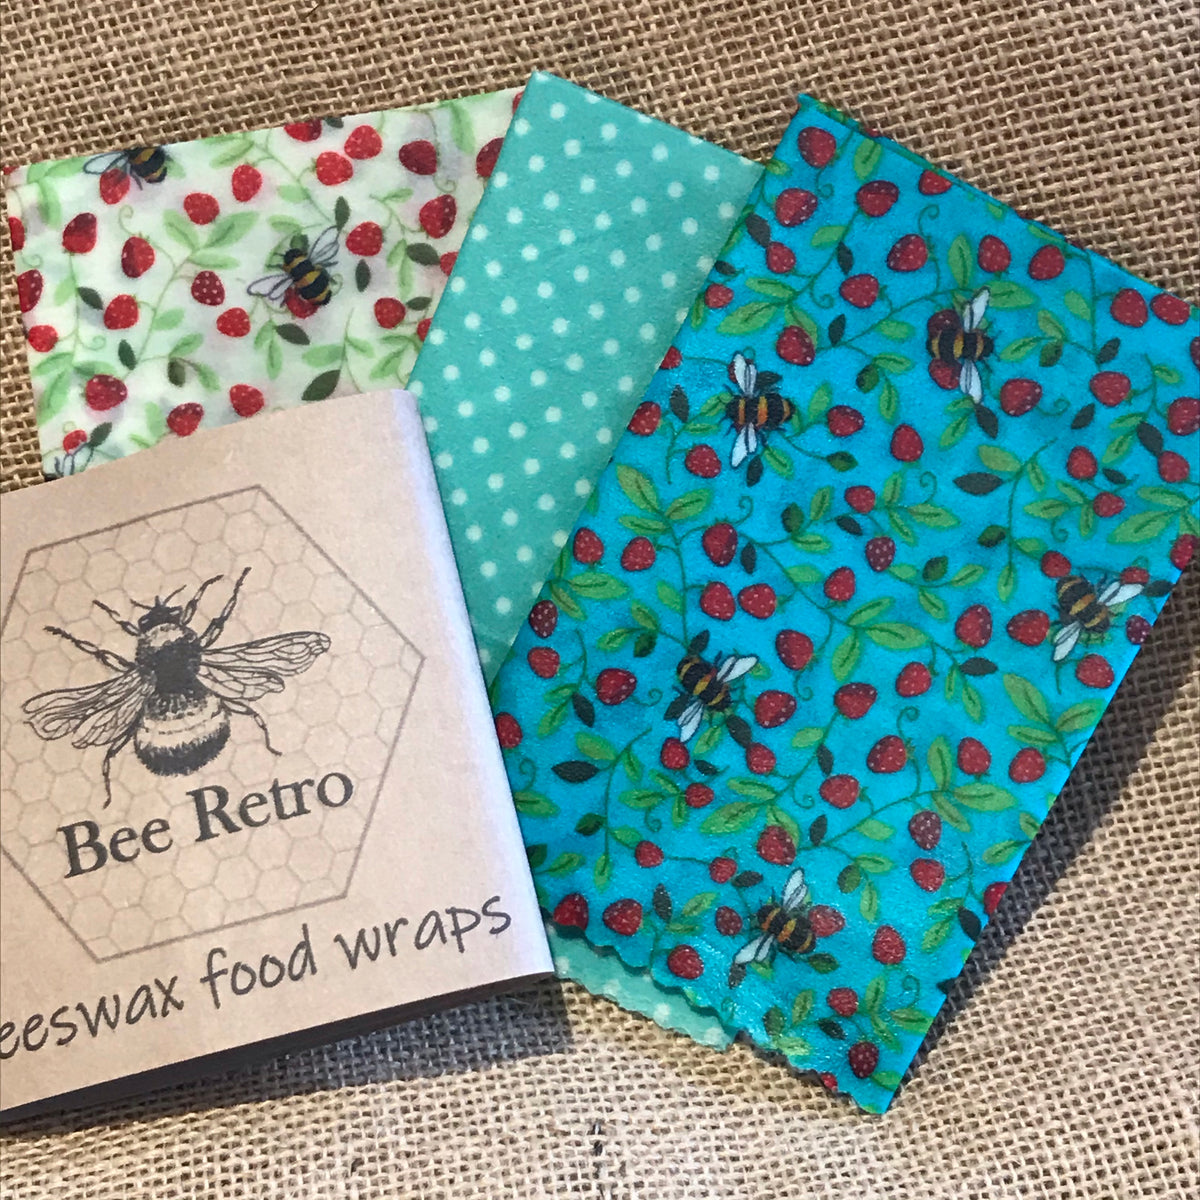 Beeswax Wrap, DIY Medium Kit, HoneyBee Wrap, Great Gift